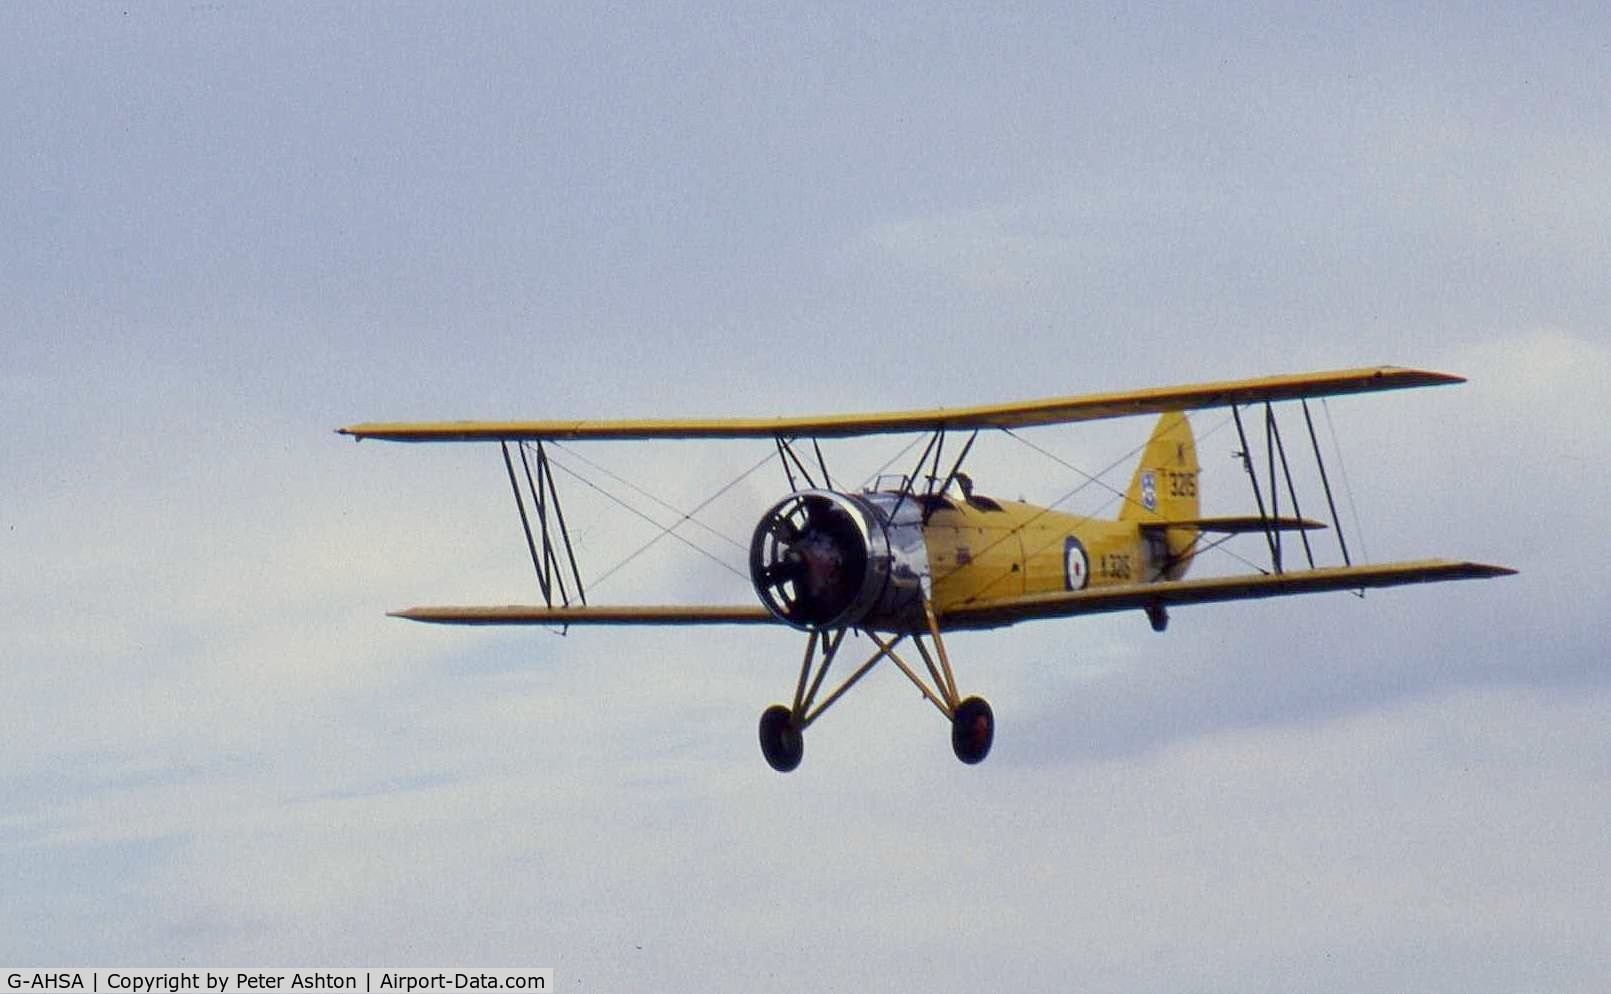 G-AHSA, 1933 Avro 621 Tutor C/N K3215, Old Warden, Bedfordshire, England. August 1993